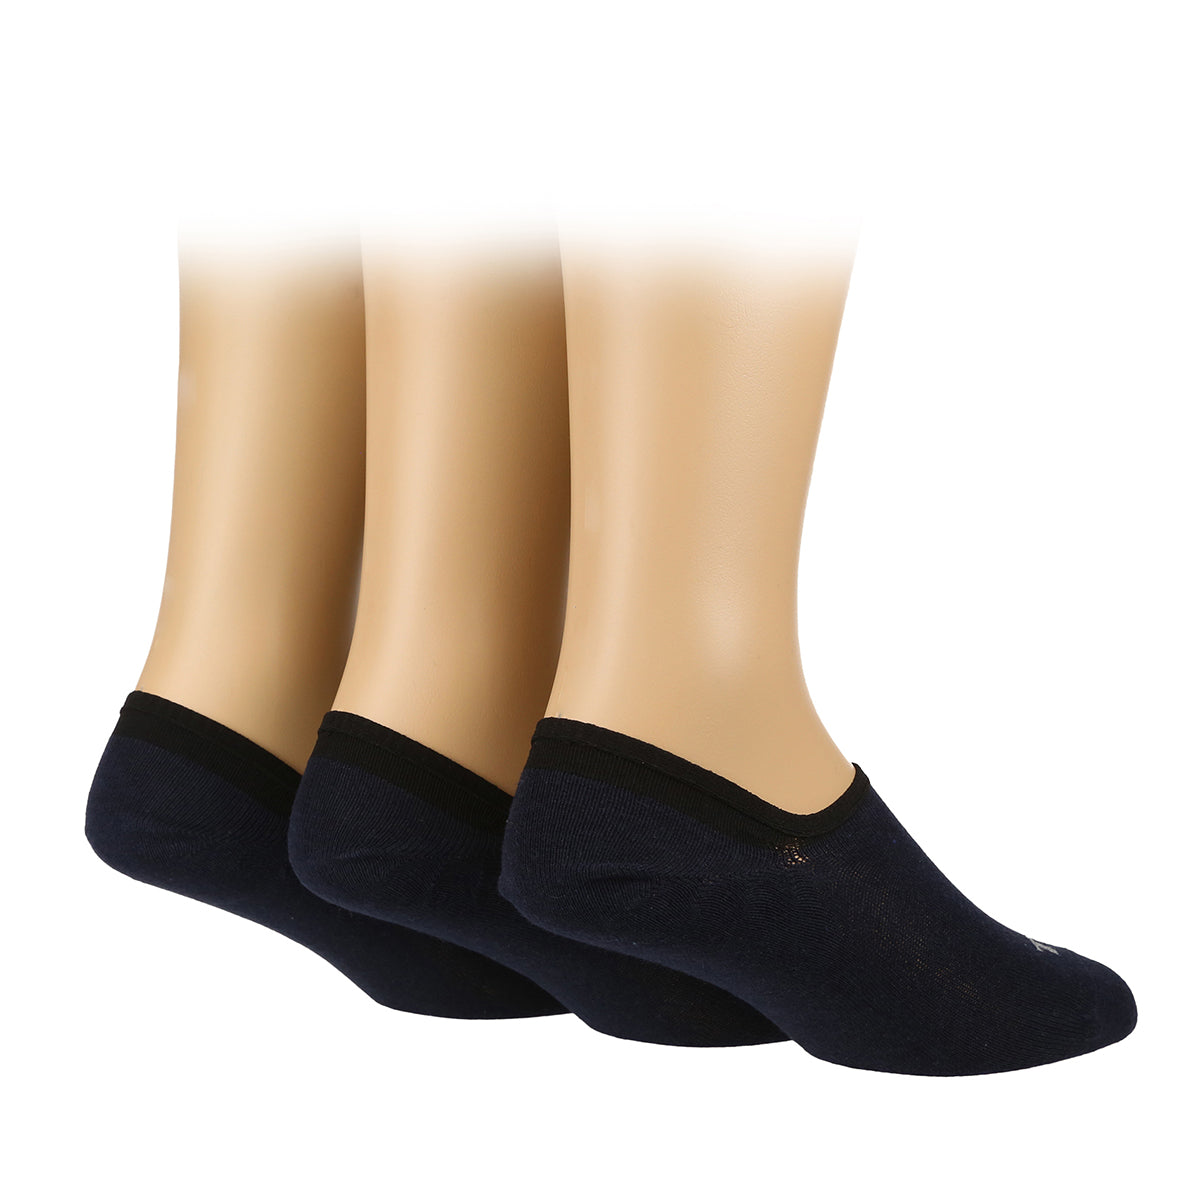 Men's High Cut Ped Socks - 3 Pairs